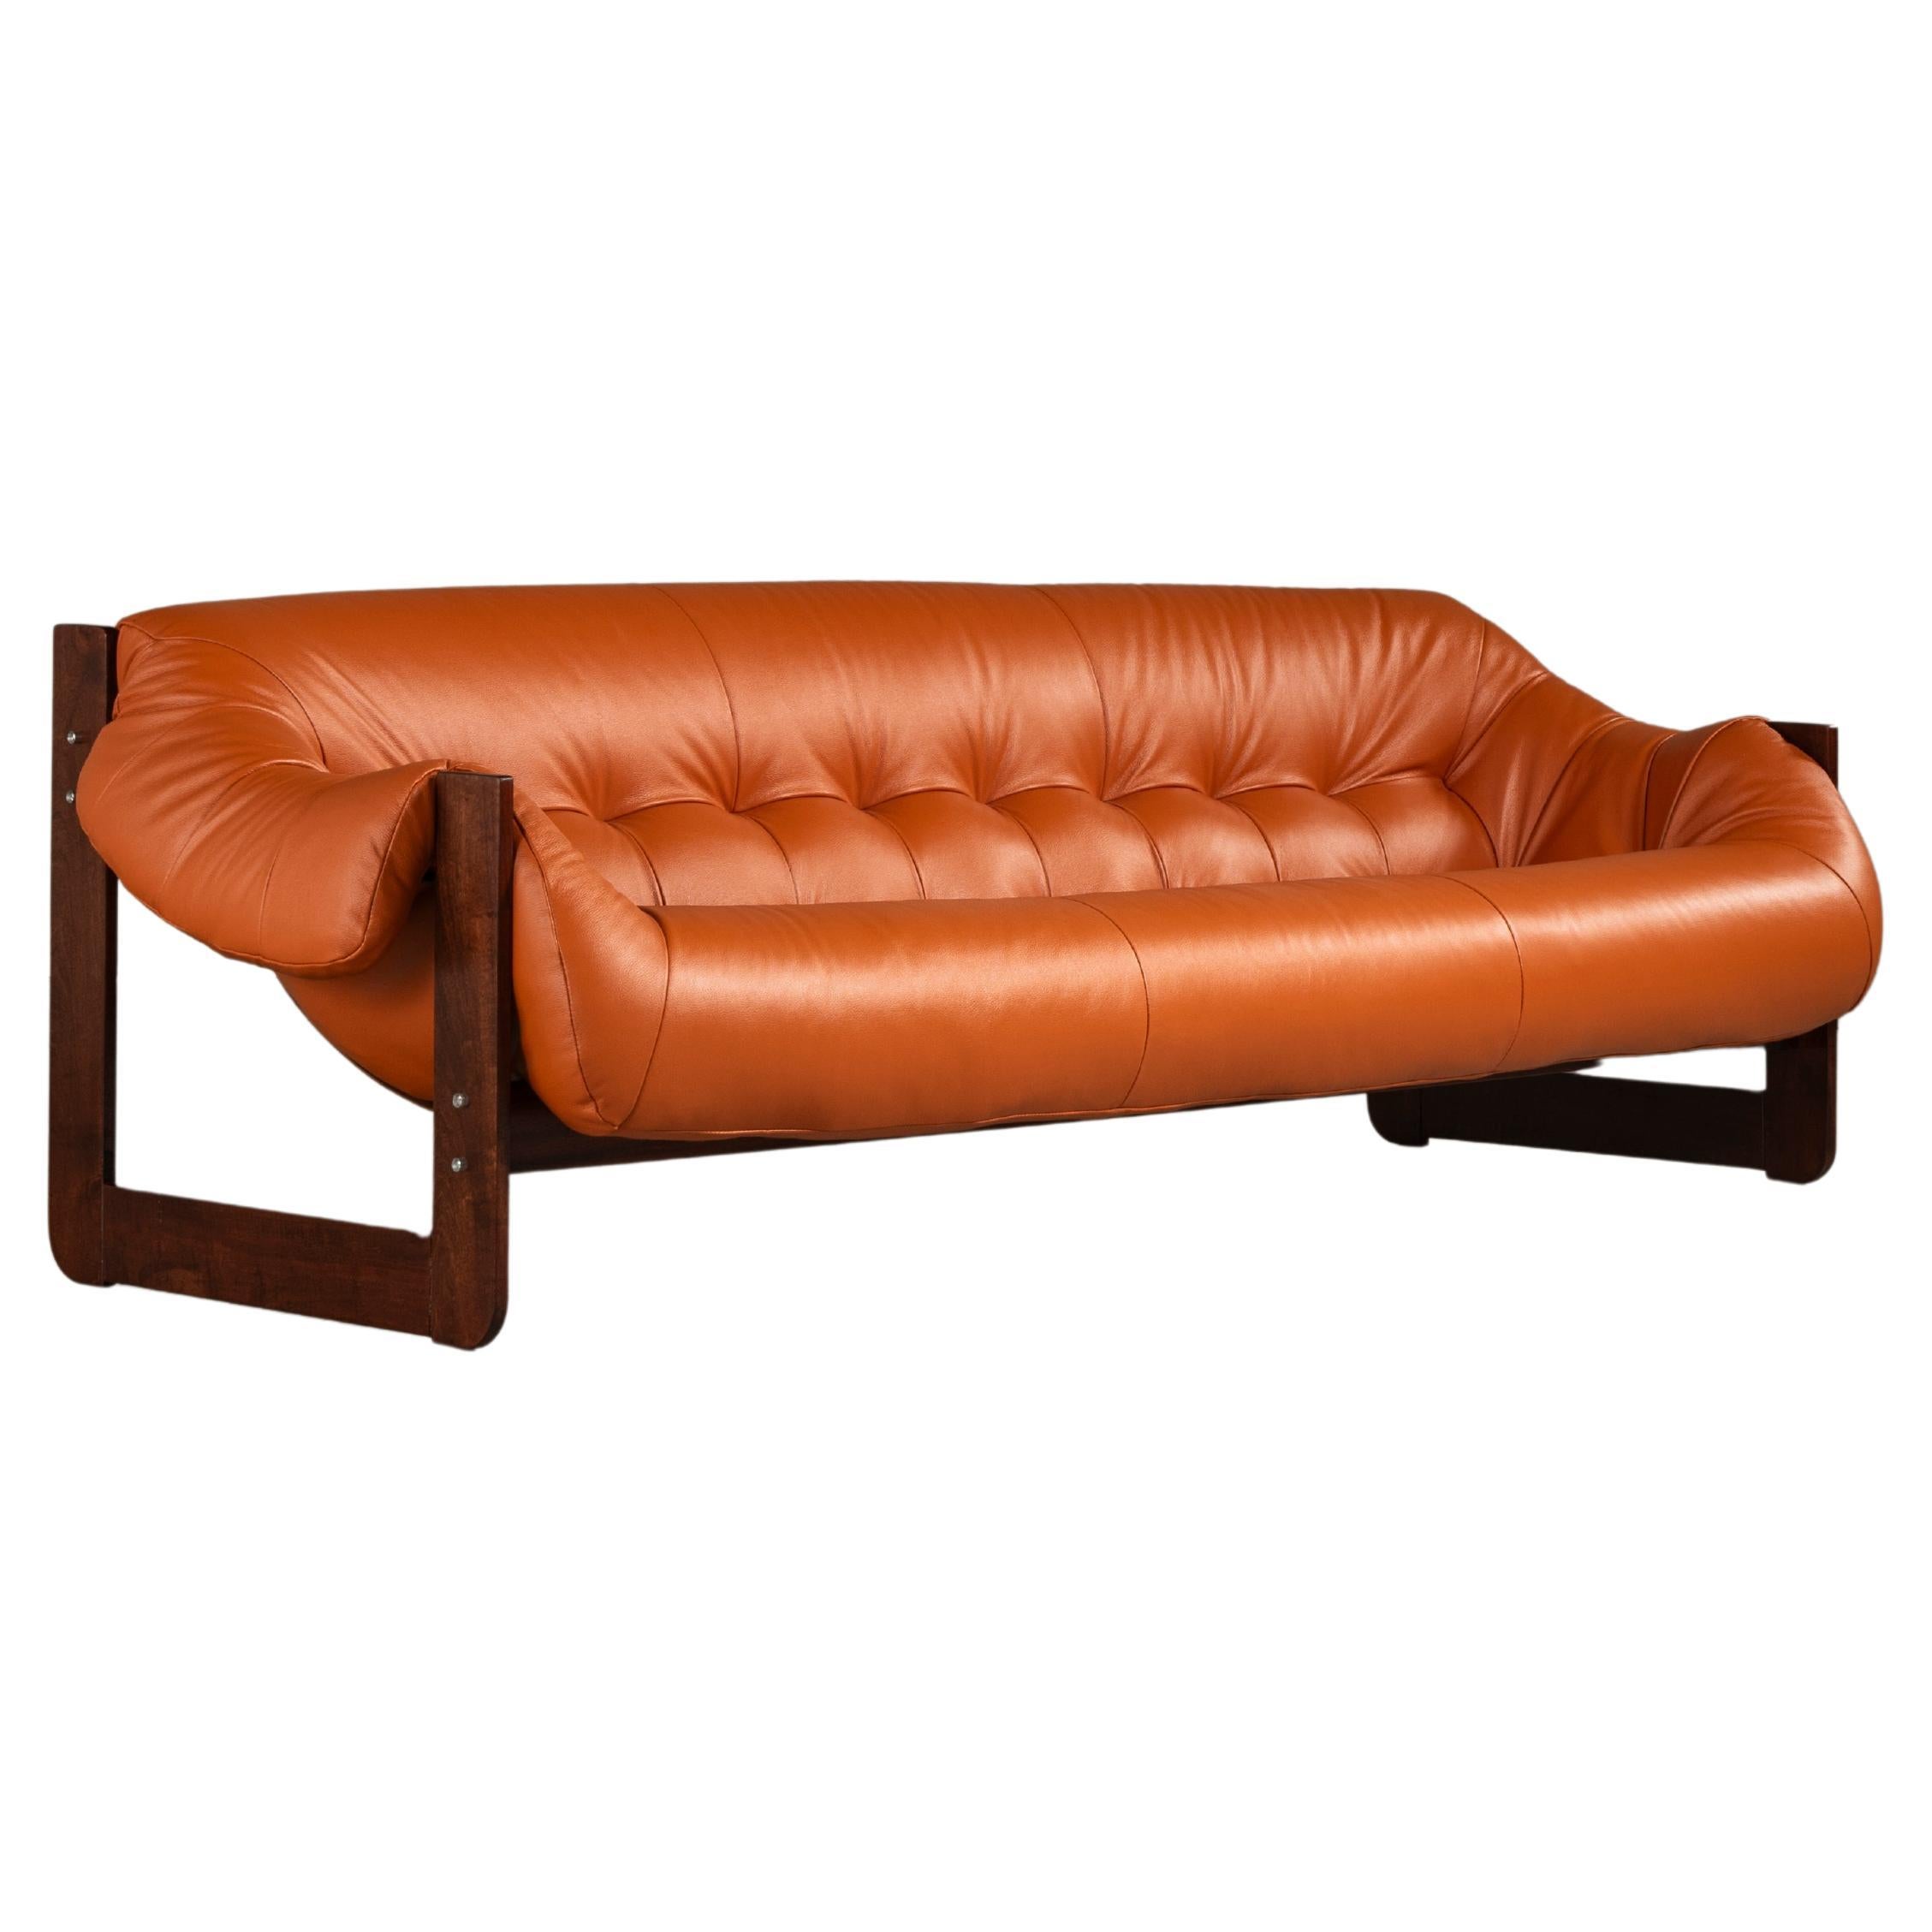 'MP-97' Sofa, by Percival Lafer, Brazilian Modern